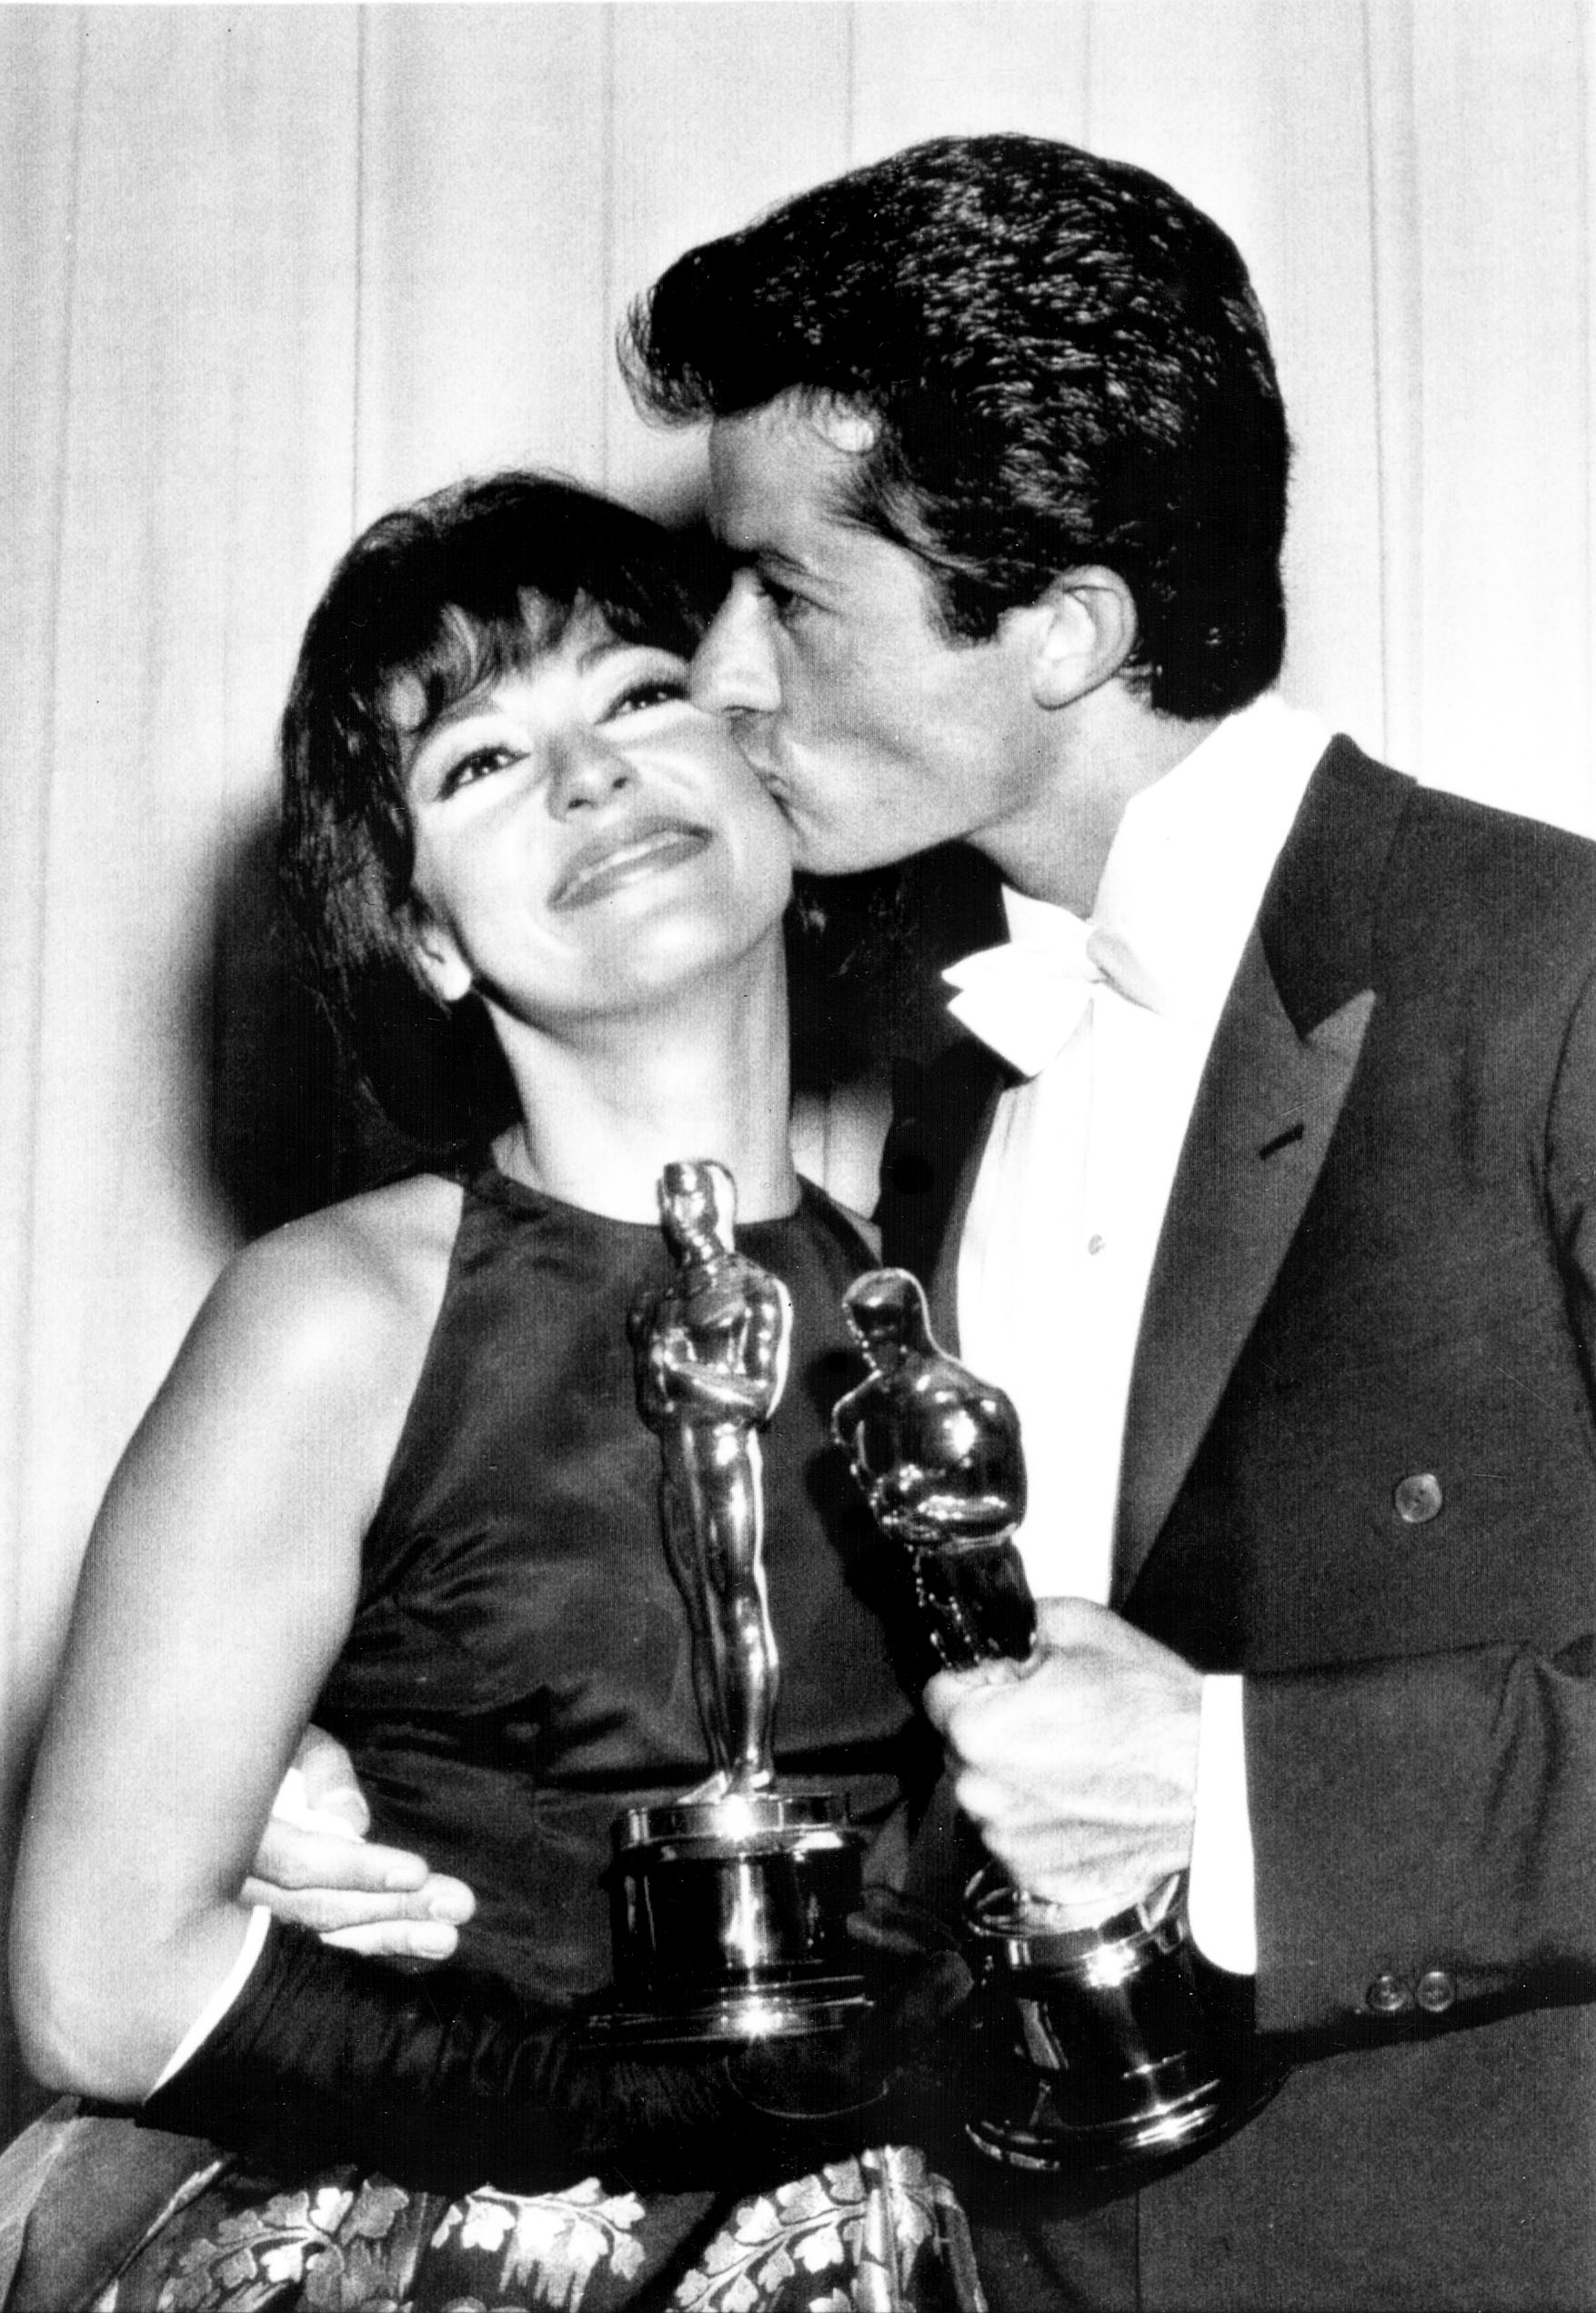 WEST SIDE STORY Oscar winners Rita Moreno, left, and George Chakiris